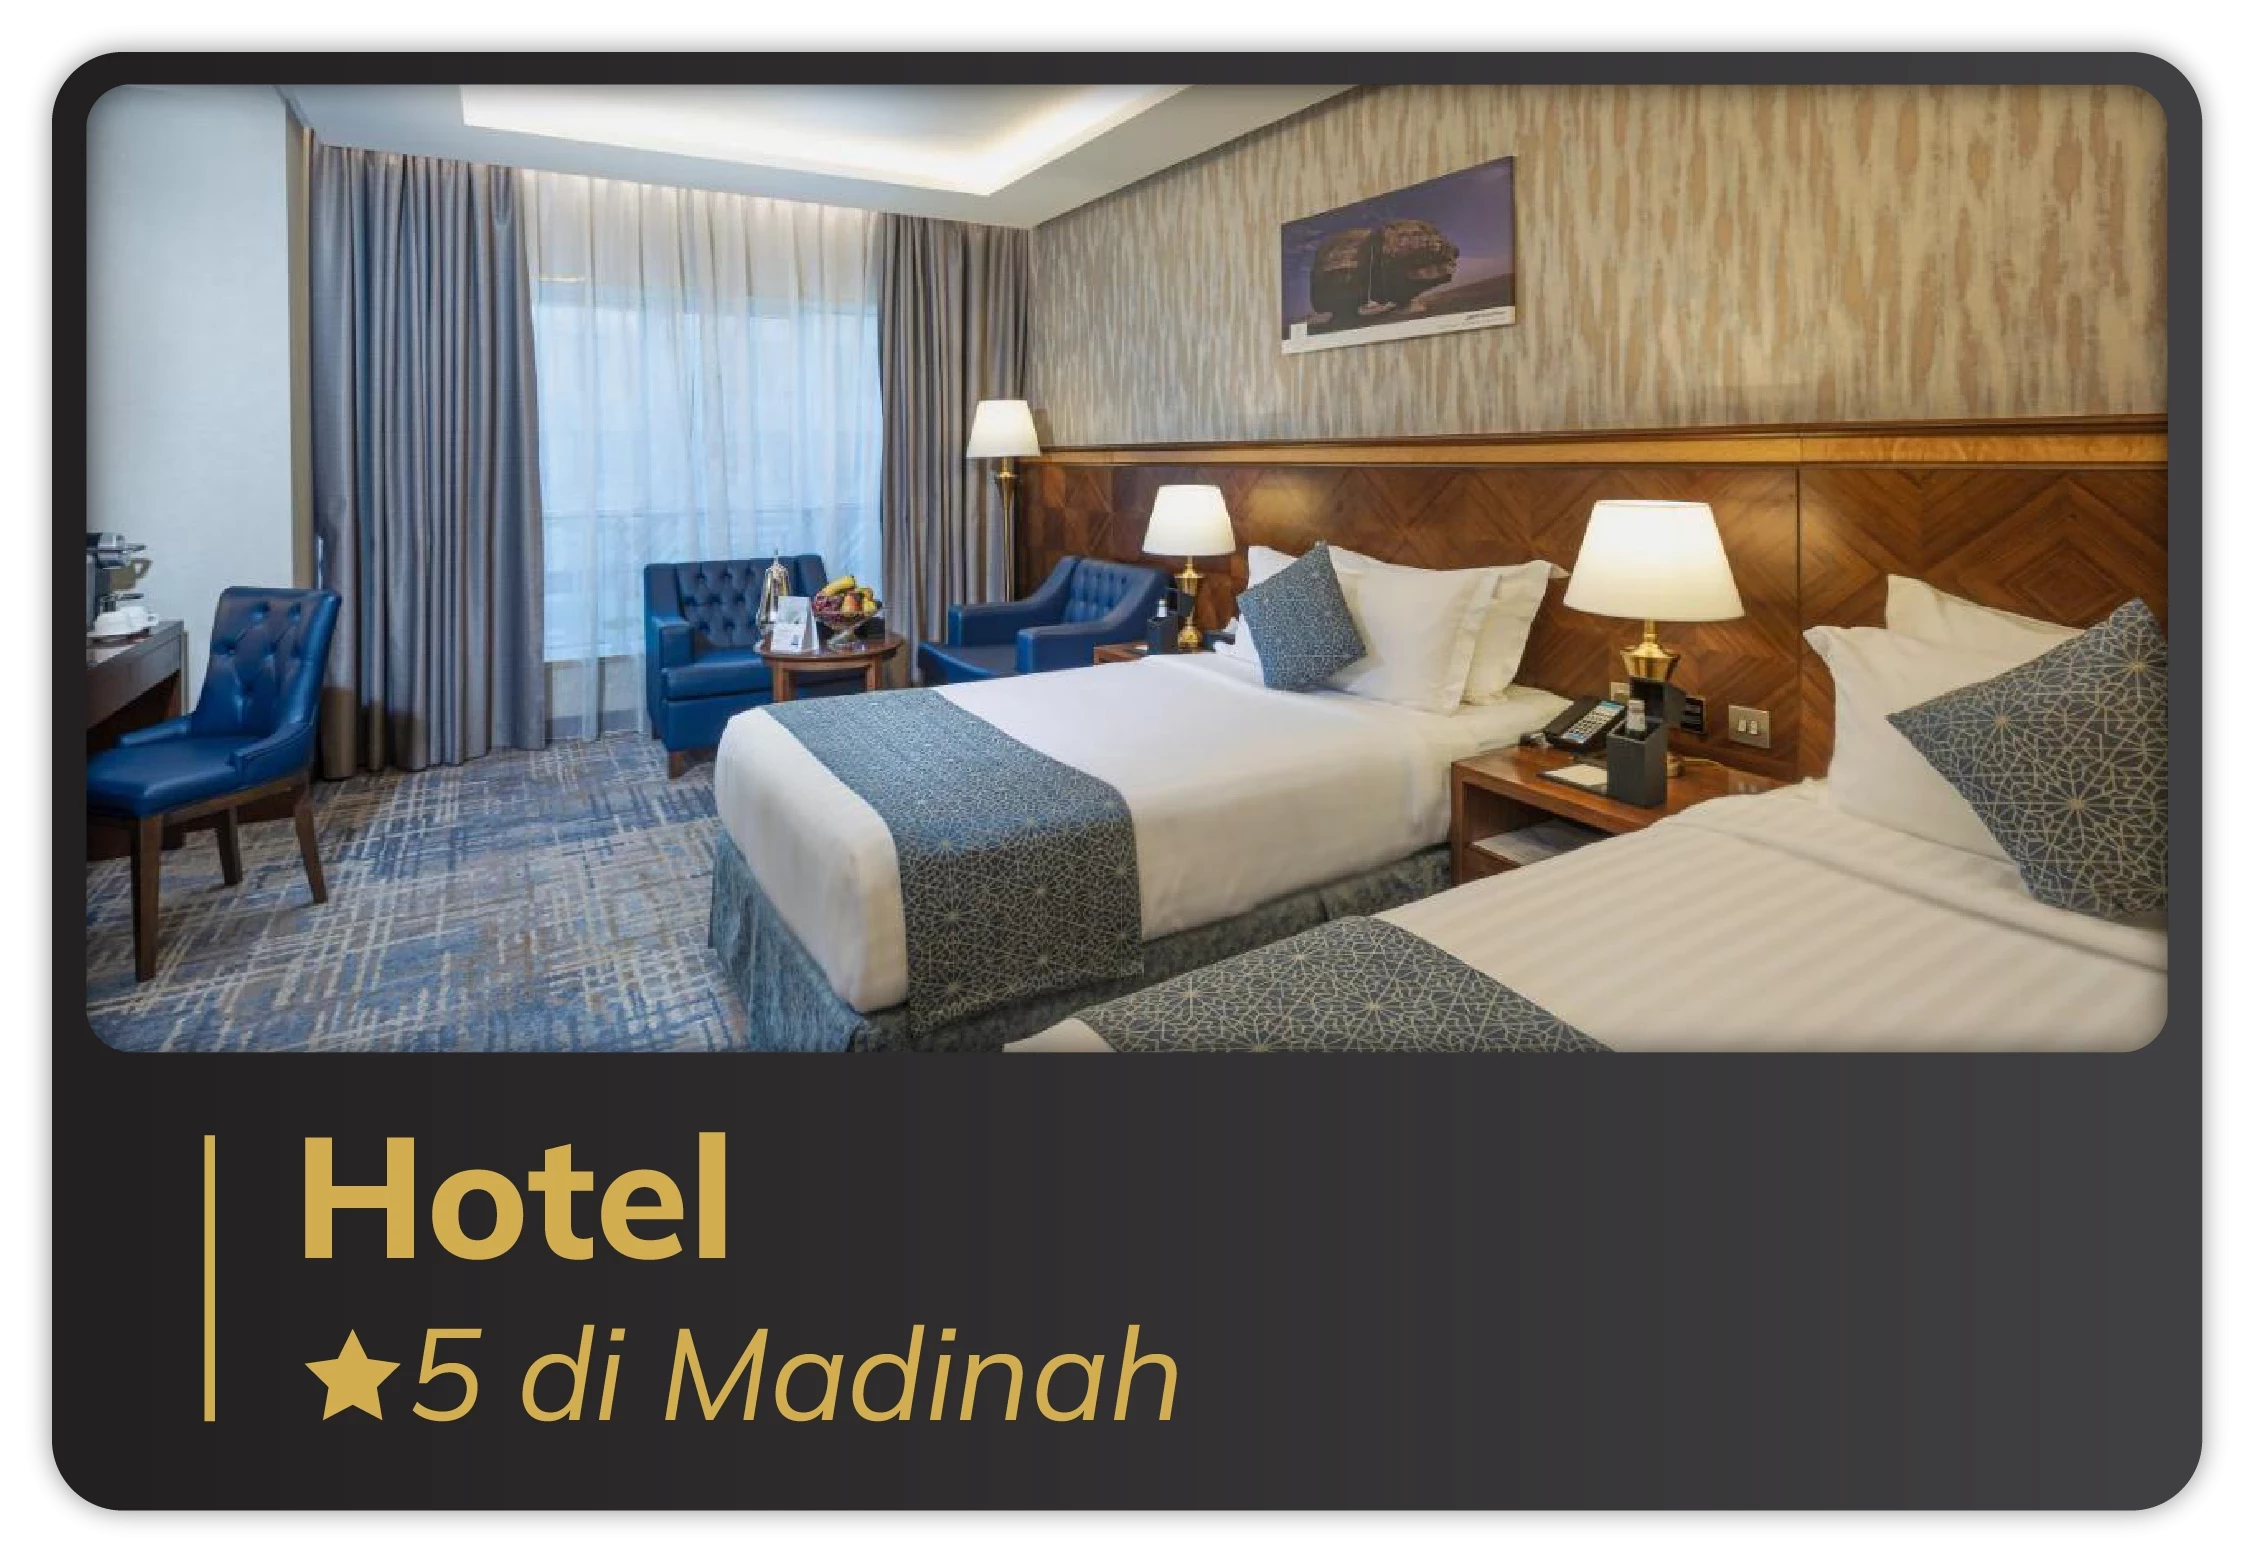 Hotel Bintang 5 di Madinah